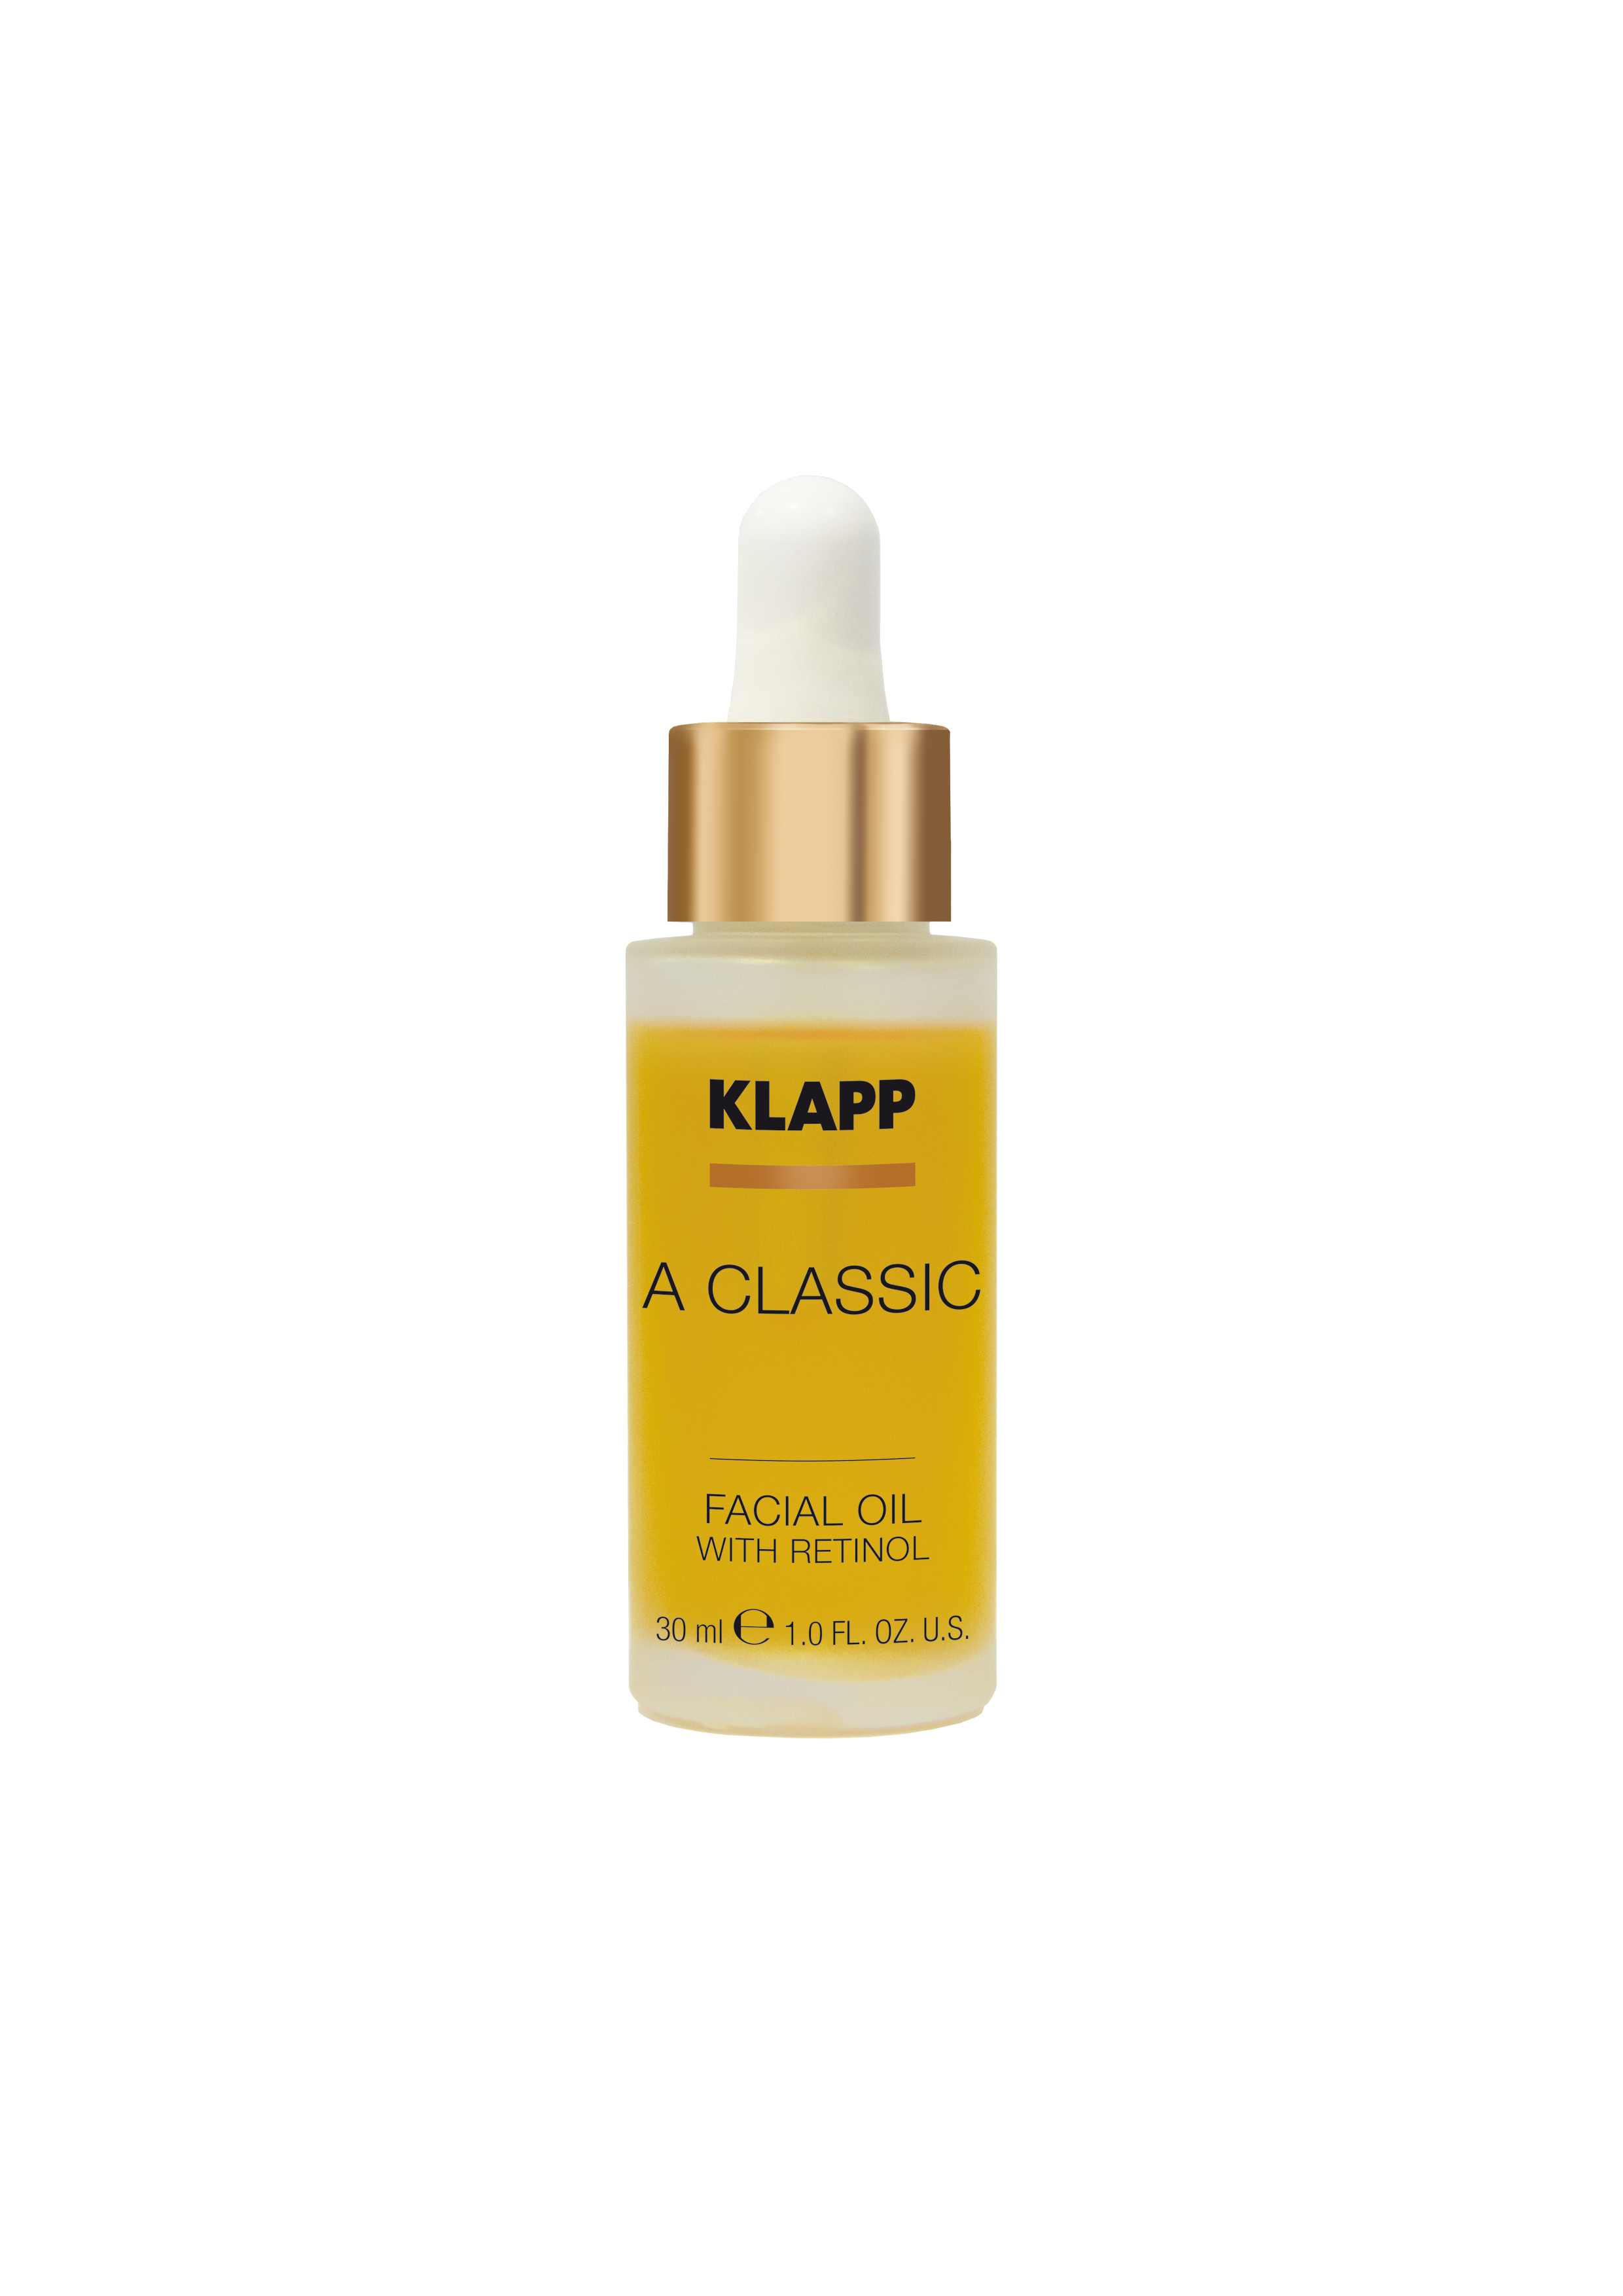 Klapp facial oil with retinol a classic - ludivine интернет-магазин профессиональной косметики.